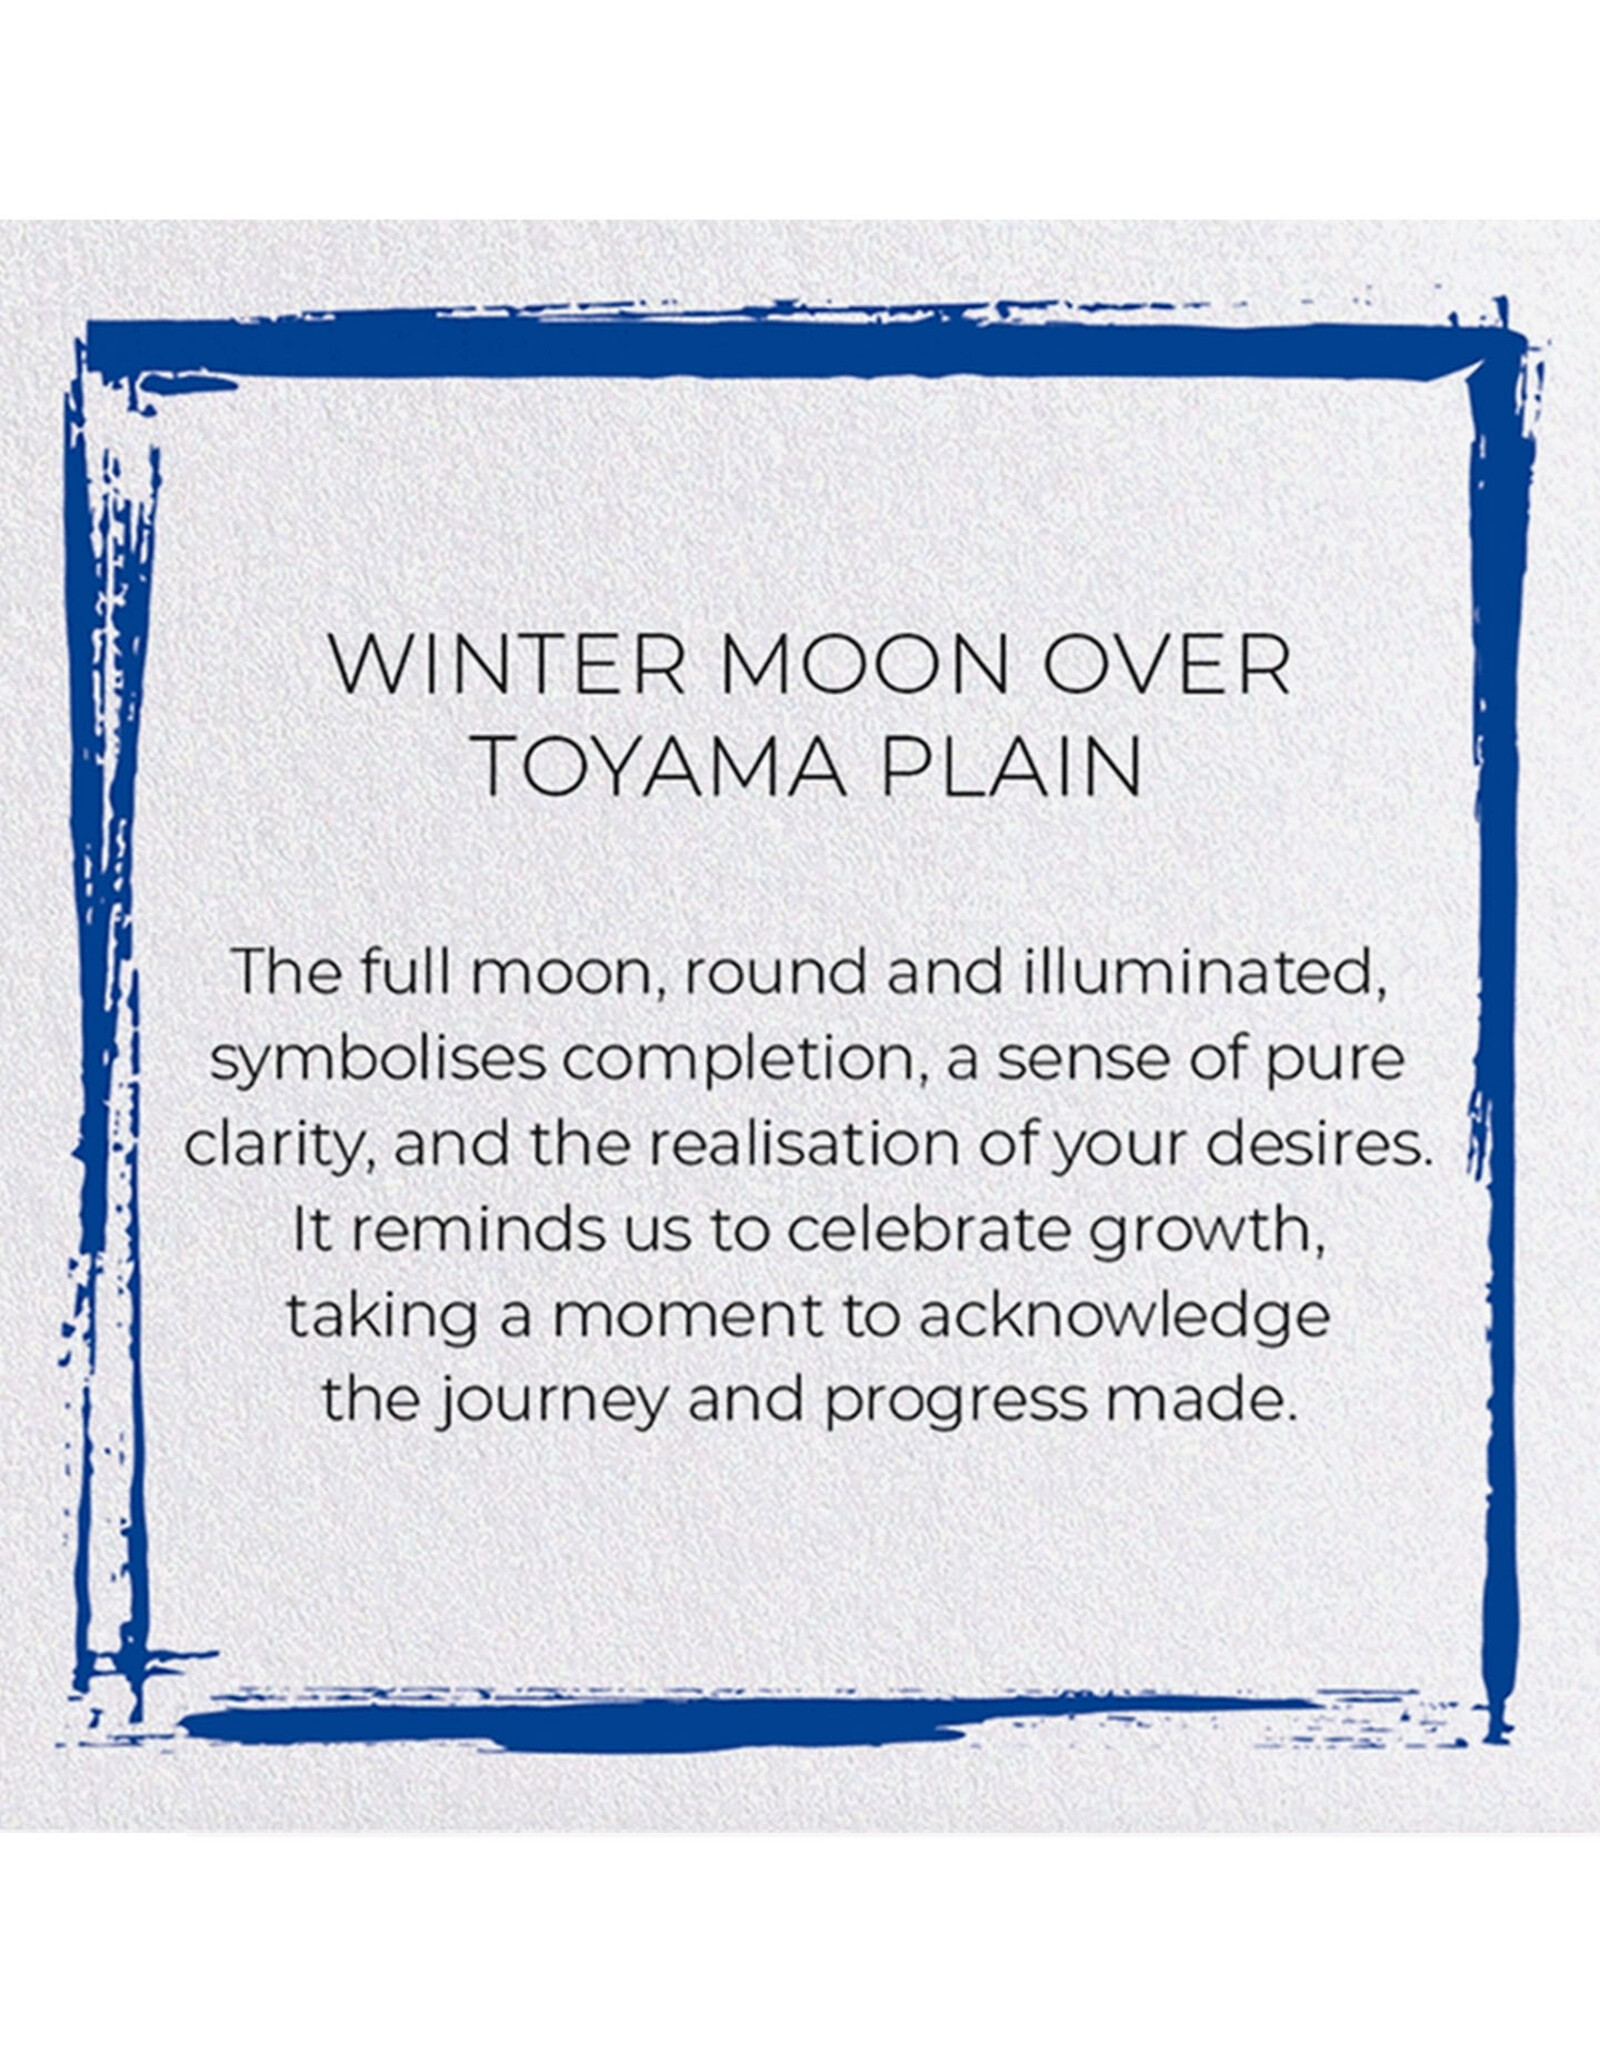 Winter Moon Over Toyama Plain: Japanese Greeting Card